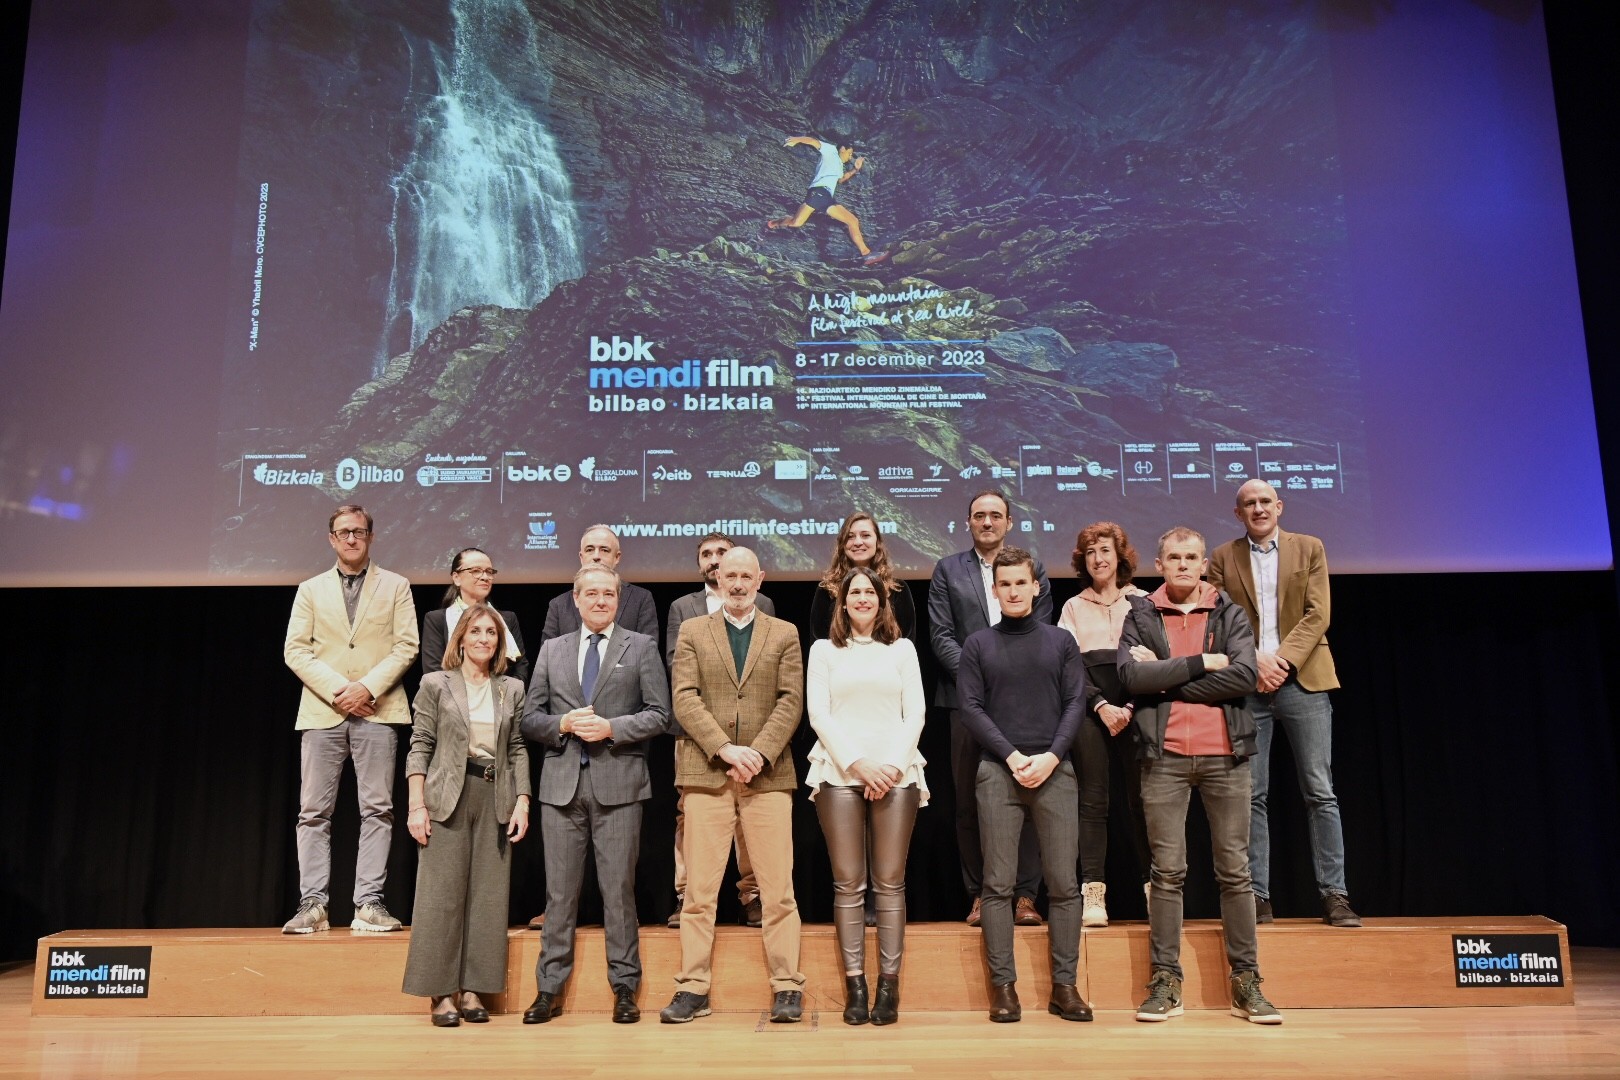 17 World premieres at the 16th edition of the BBK Mendi Film Bilbao Bizkaia